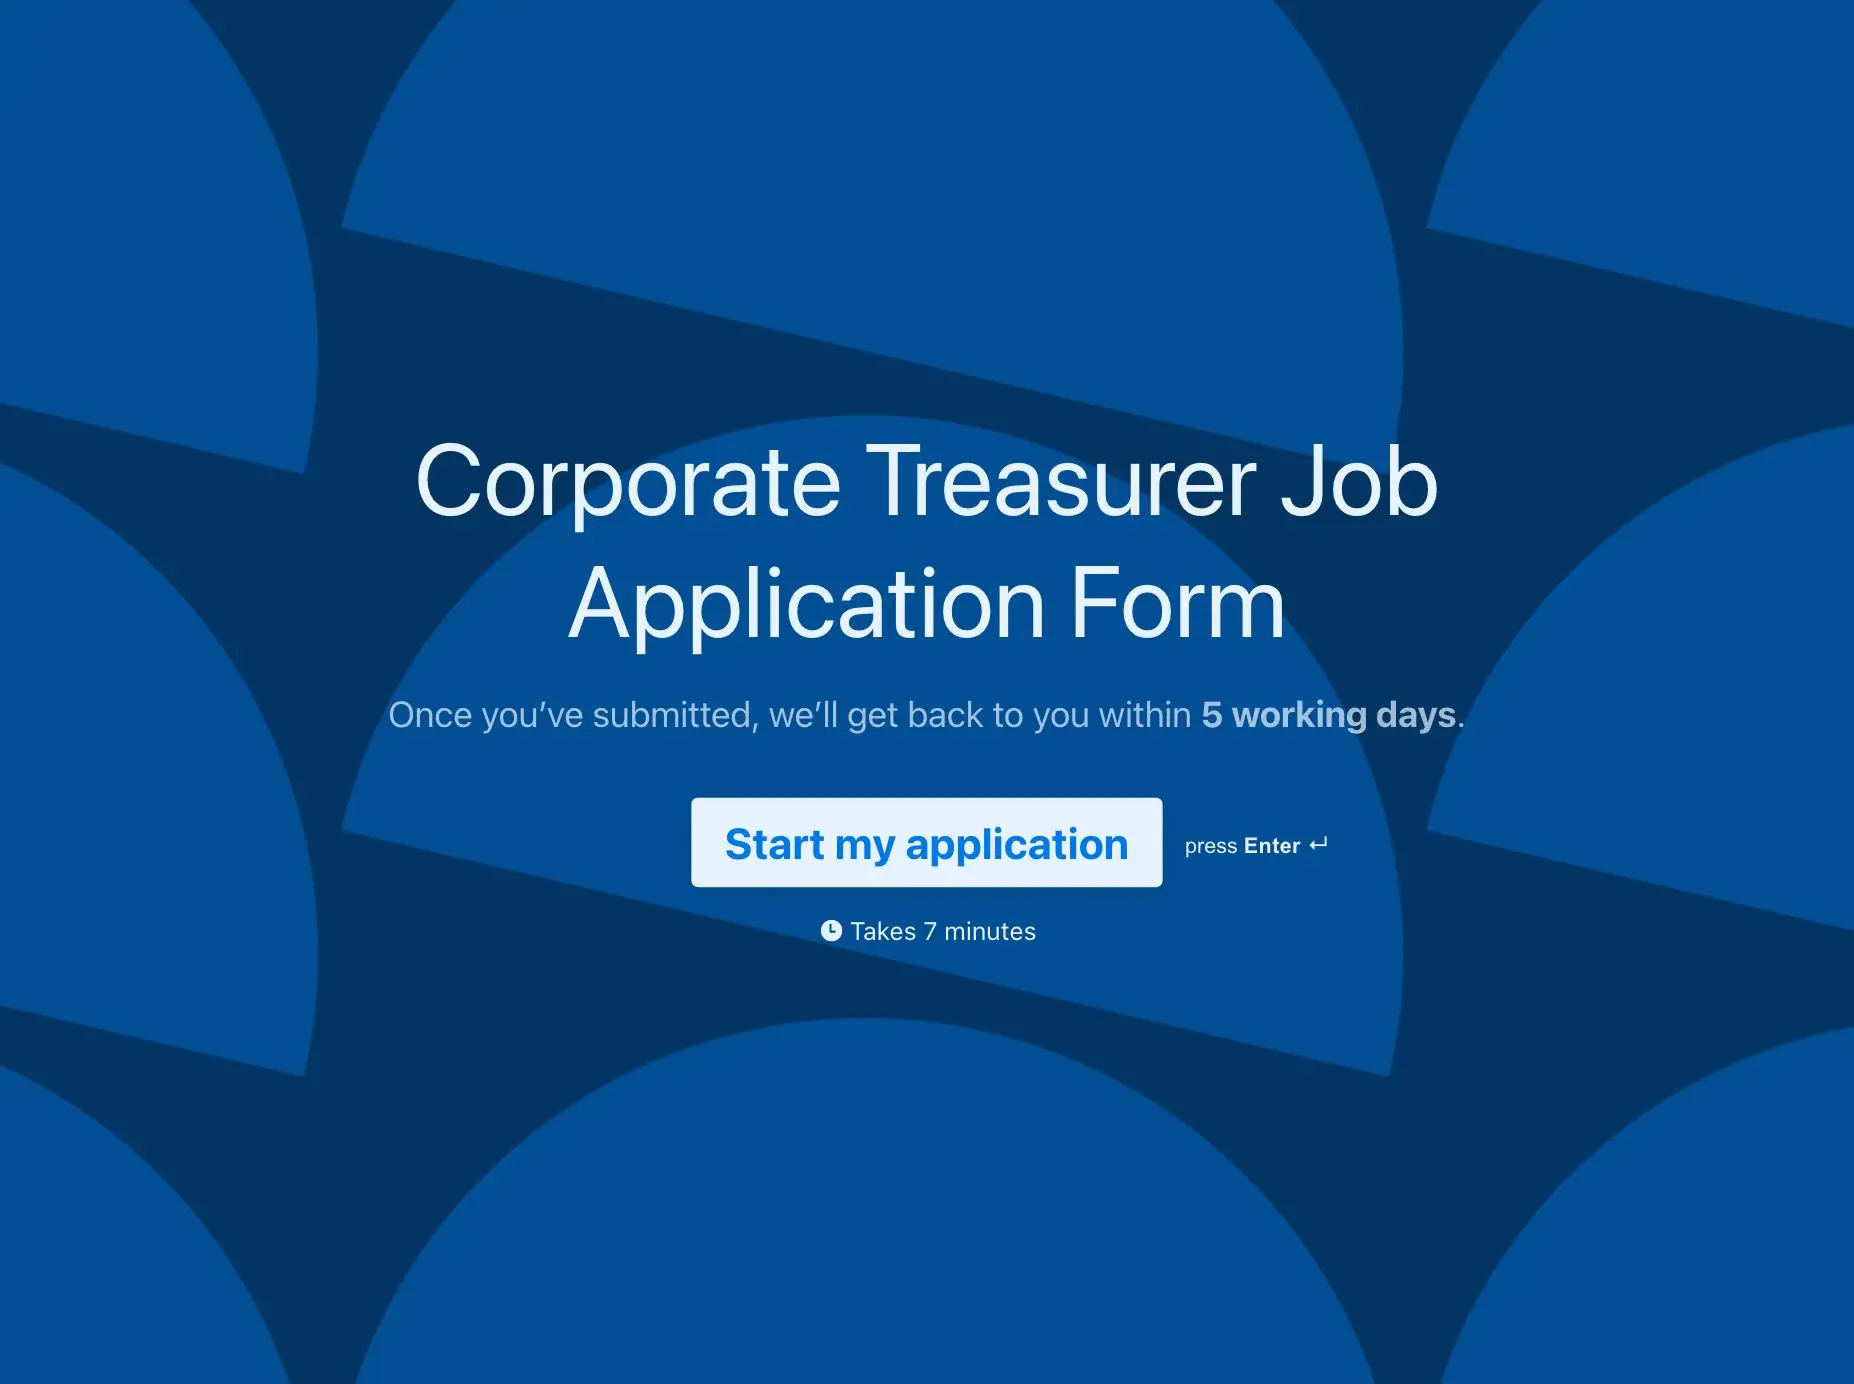 Corporate Treasurer Job Application Form Template Hero